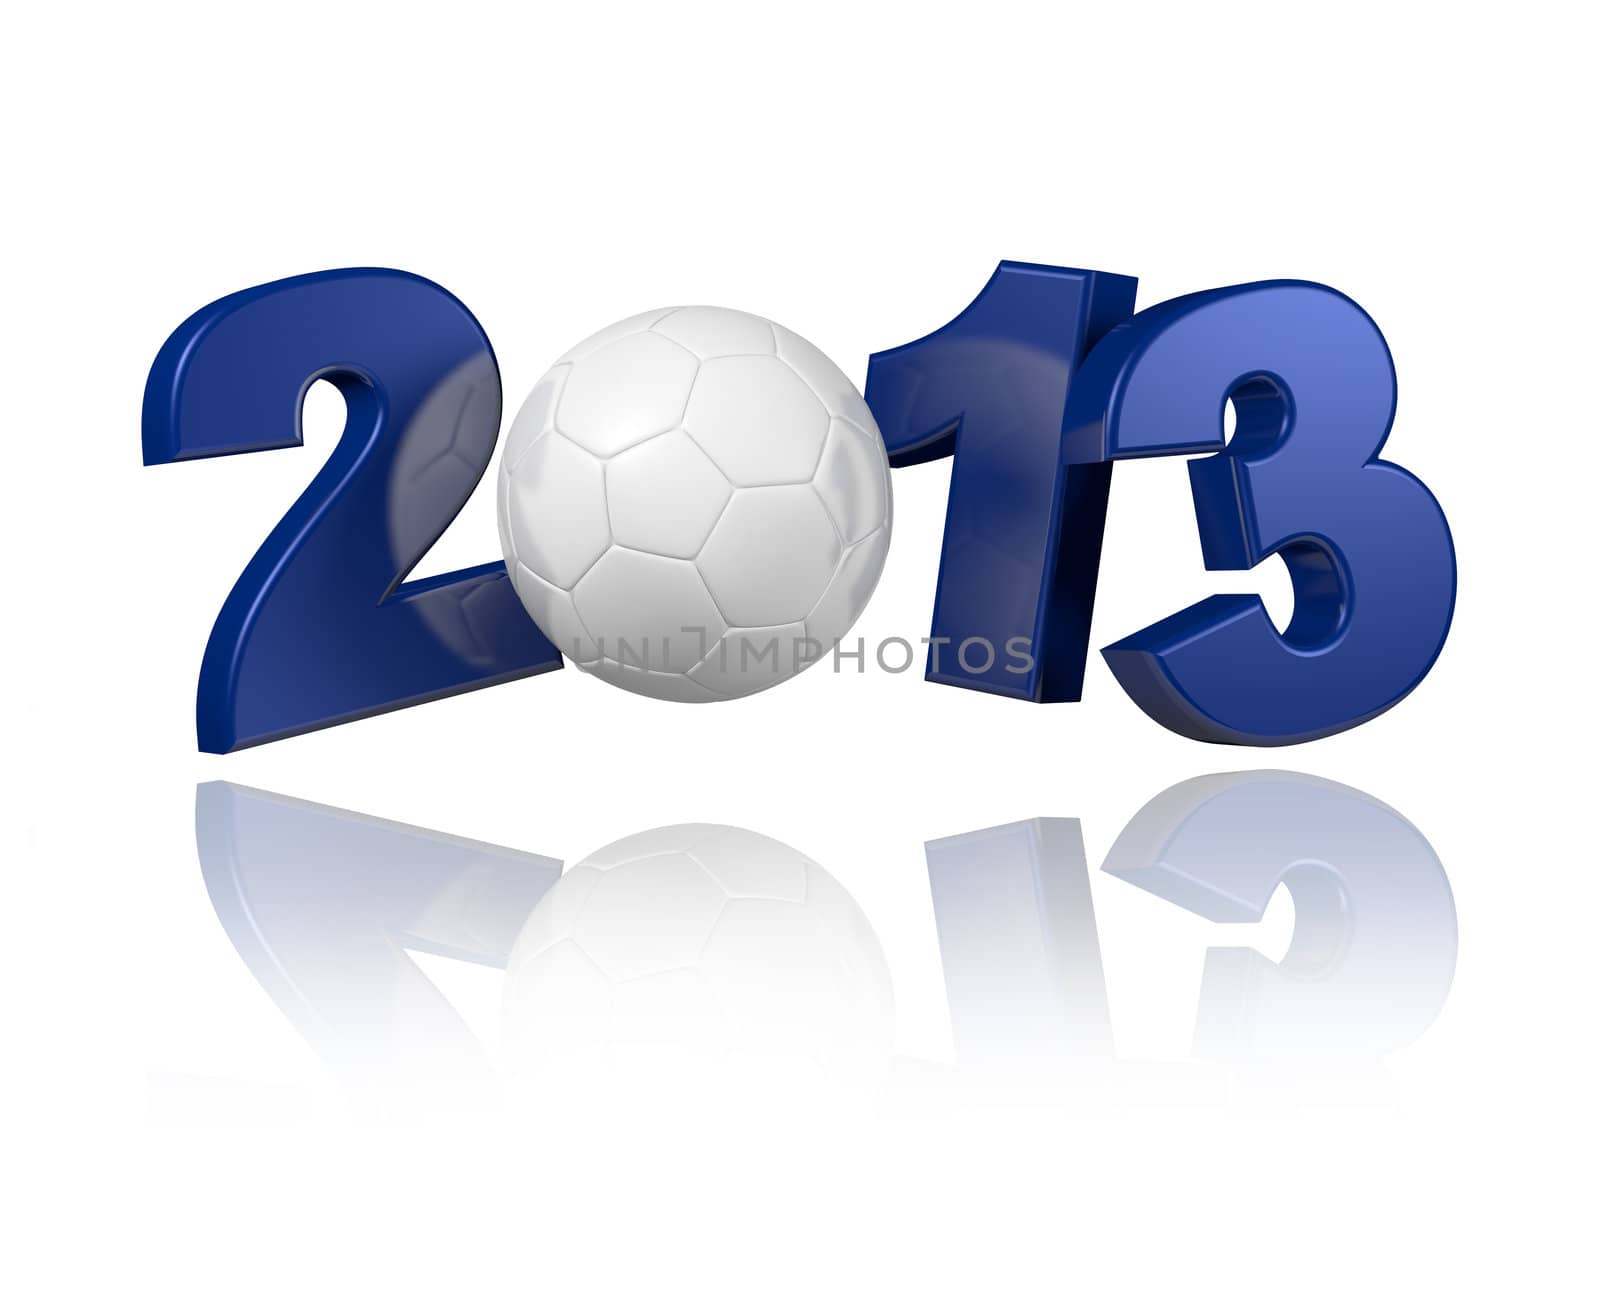 Handball 2013 design by shkyo30